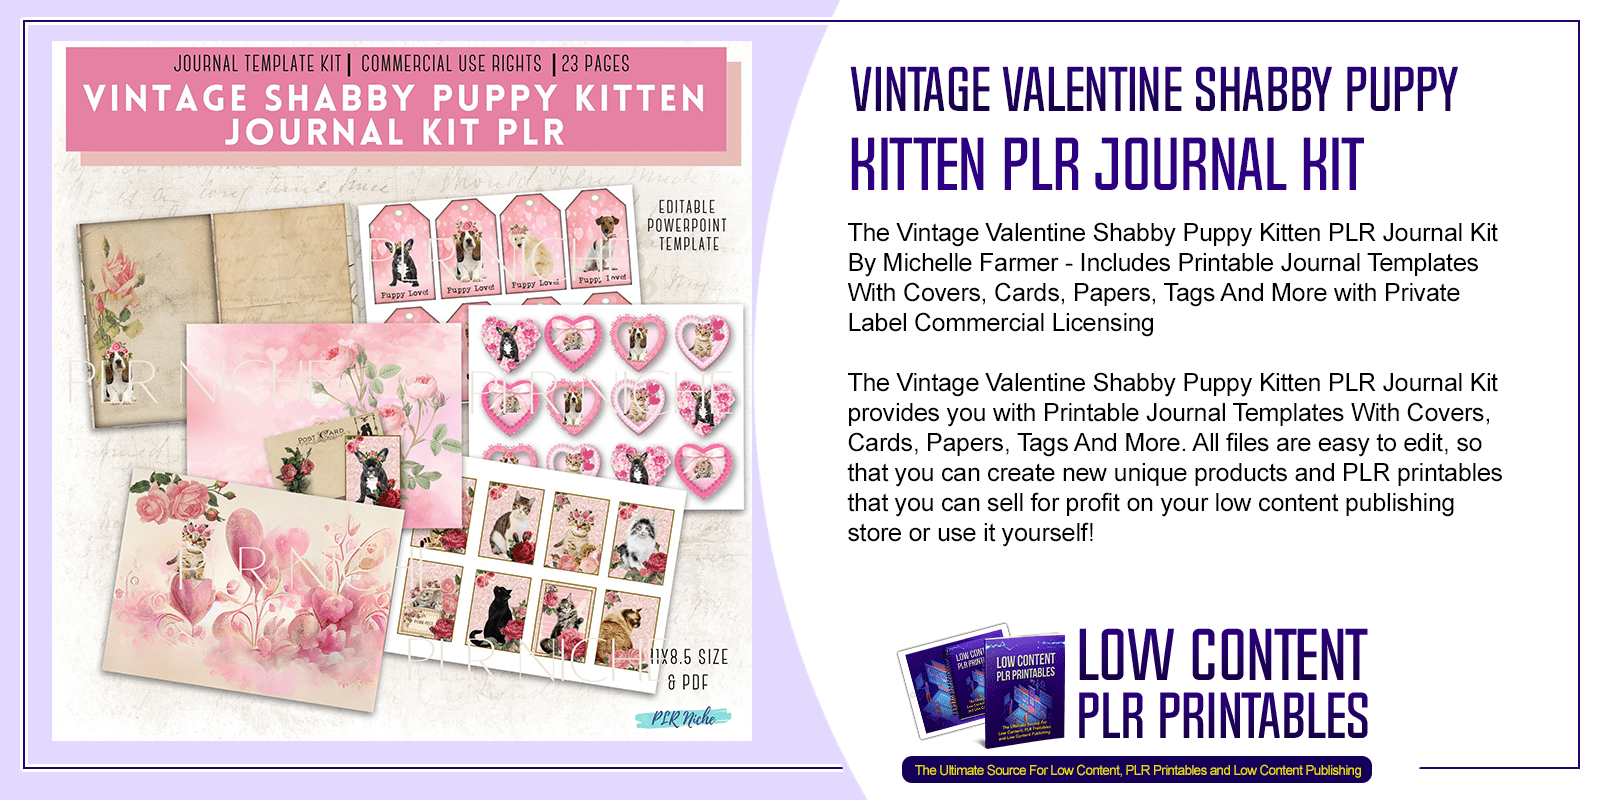 Vintage Valentine Shabby Puppie Kitten PLR Journal Kit